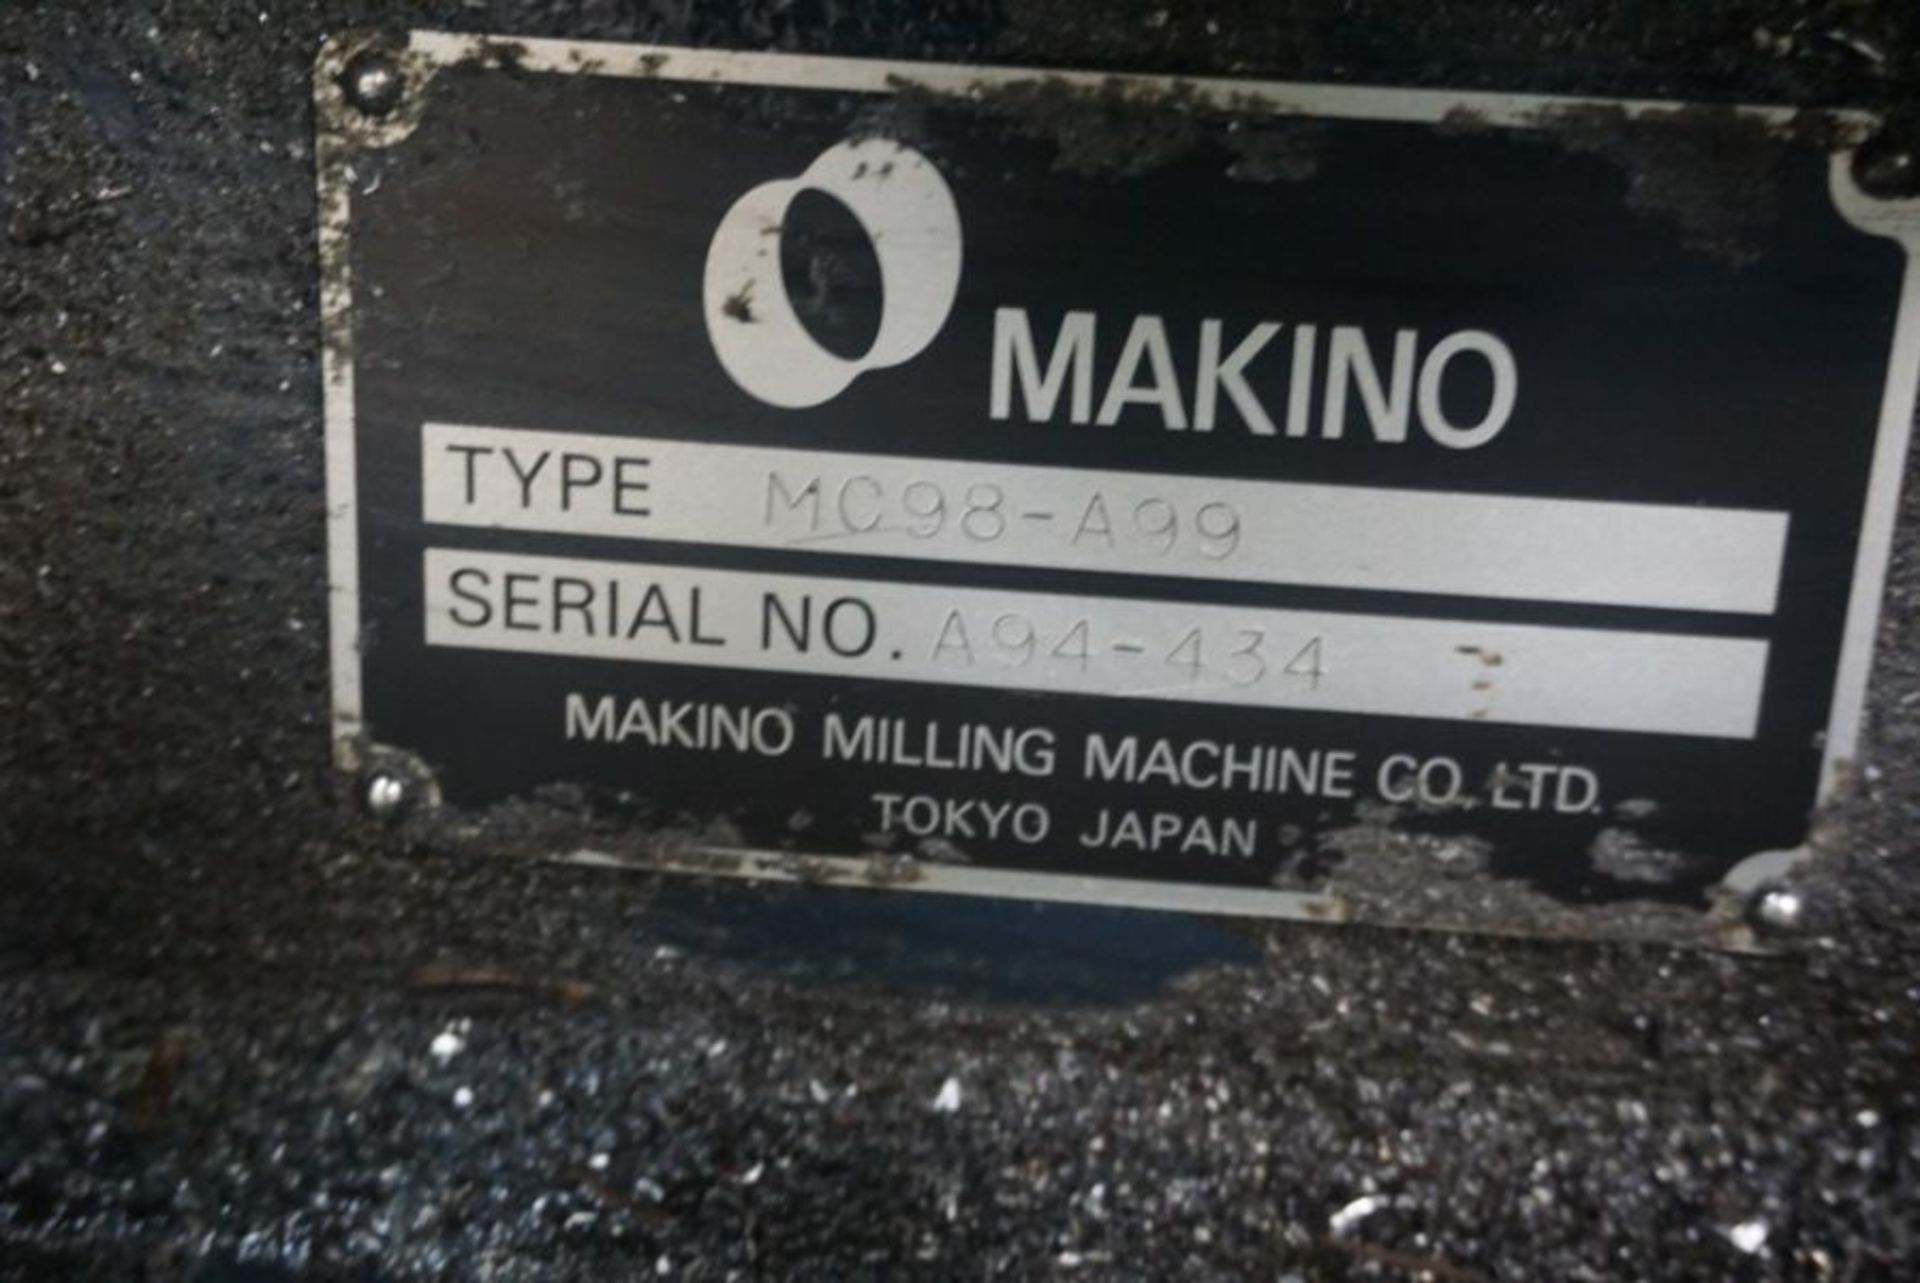 Makino MC98-A99 4-Axis Horizontal Machining Center, Fanuc 16 Pro 3 Control, New 1991 - Image 8 of 8